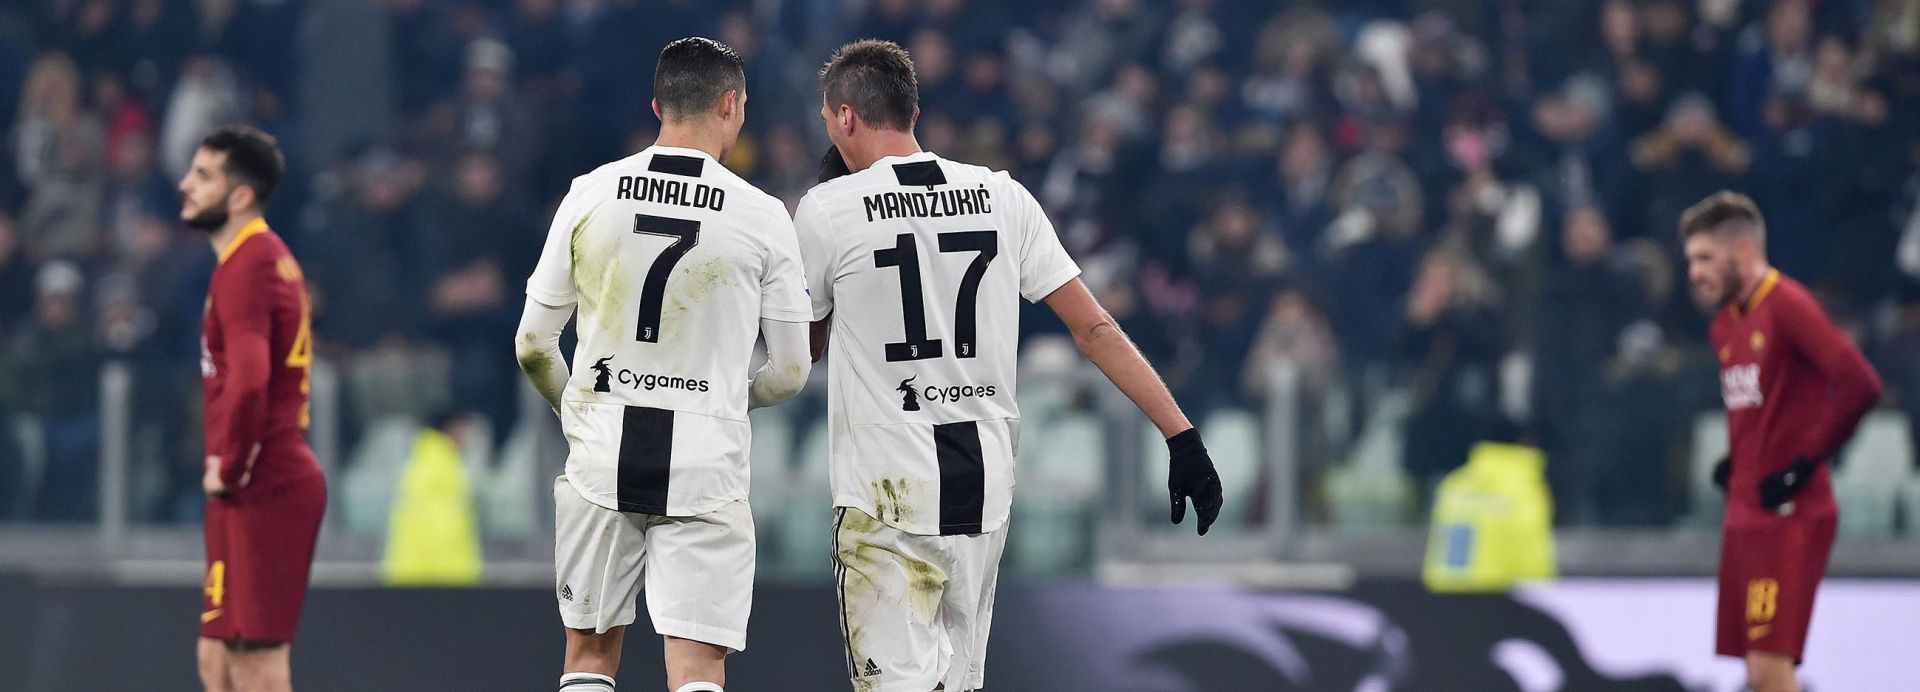 CORRIERE DELLO SPORT Juventus Mandžukiću nudi novi ugovor